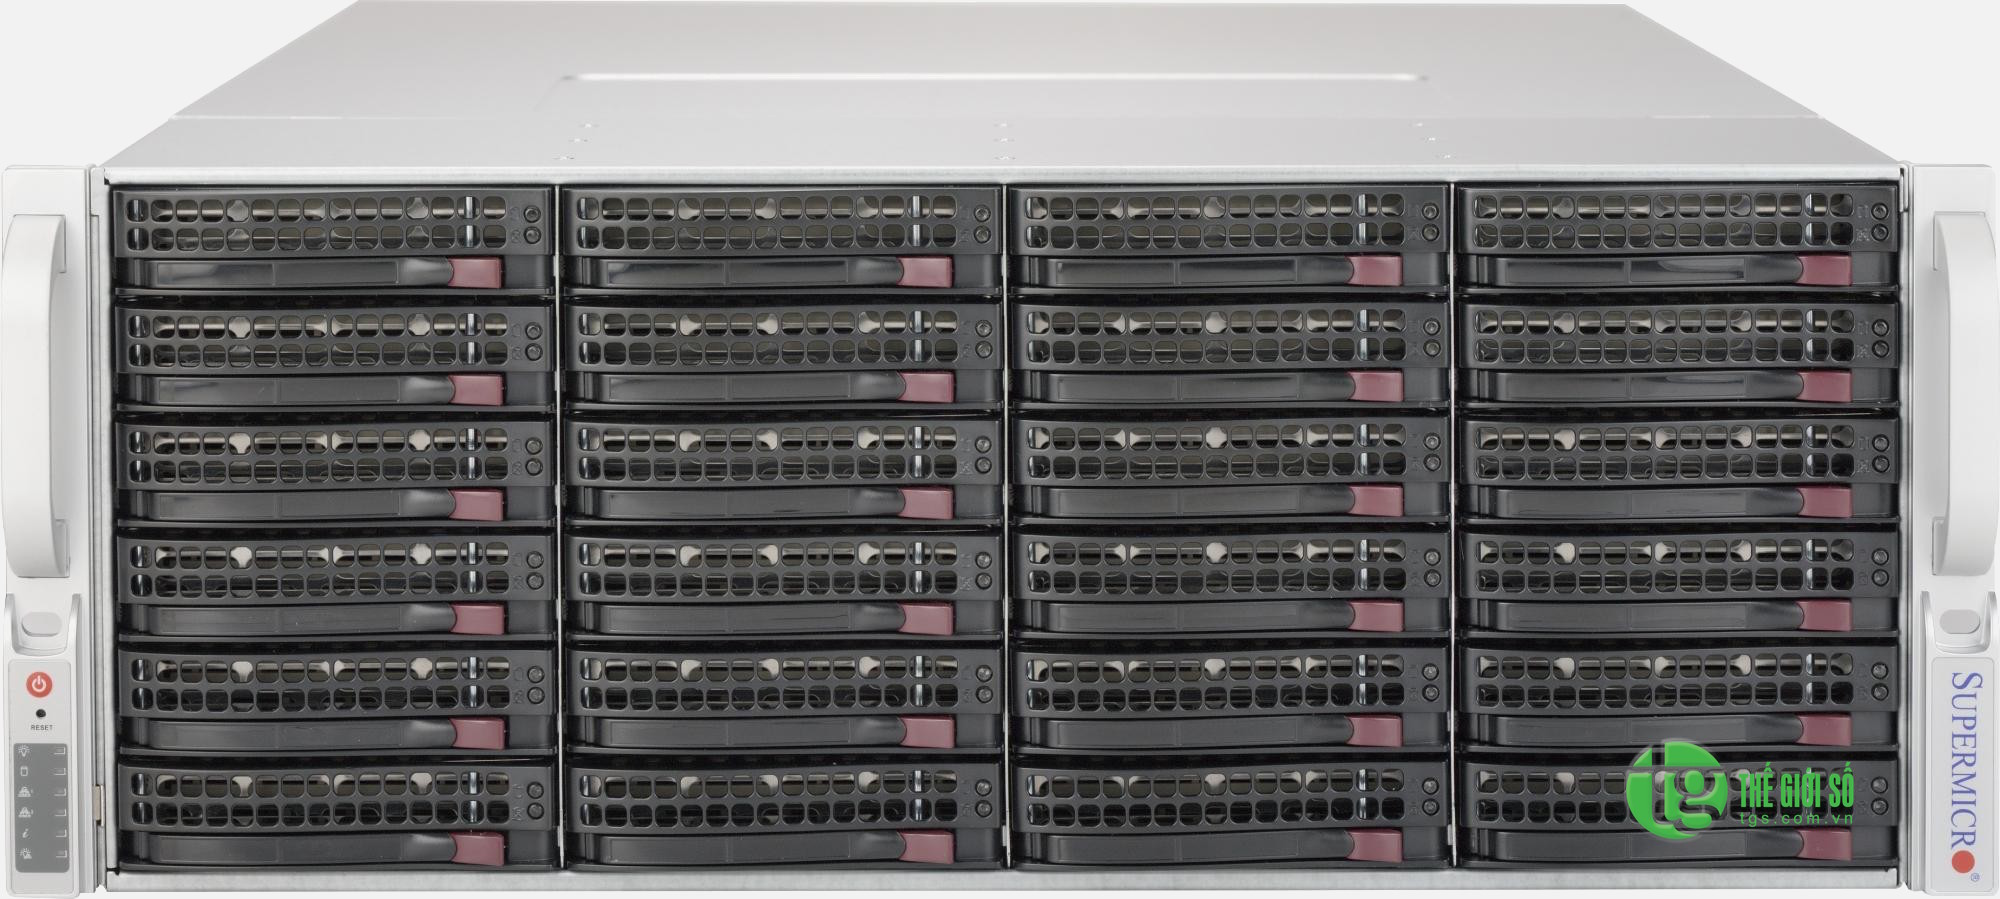 Supermicro SuperStorage Server 5048R-E1CR36L